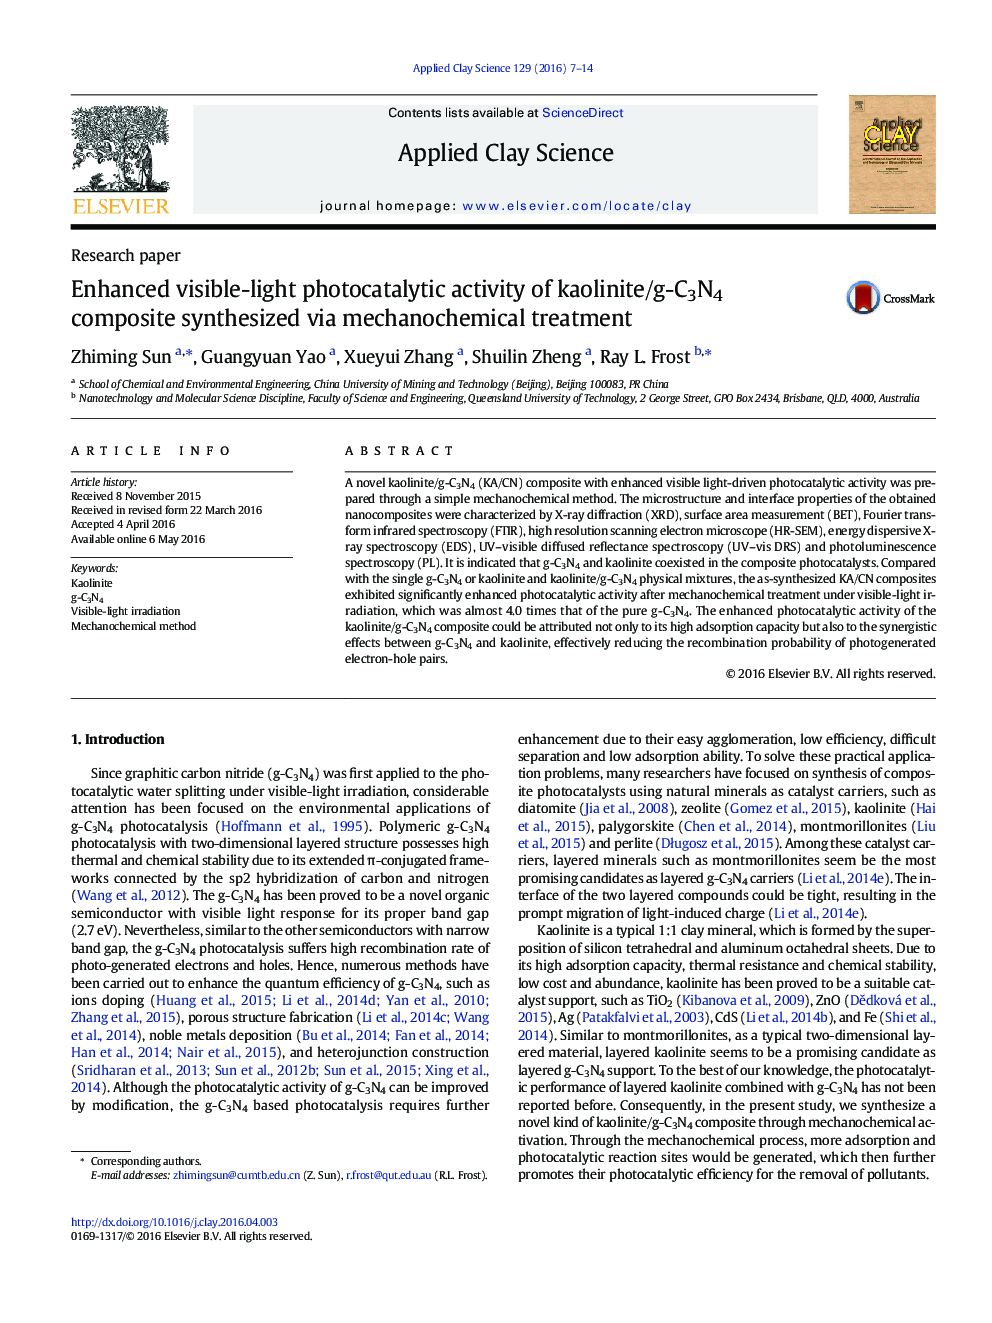 Enhanced visible-light photocatalytic activity of kaolinite/g-C3N4 composite synthesized via mechanochemical treatment